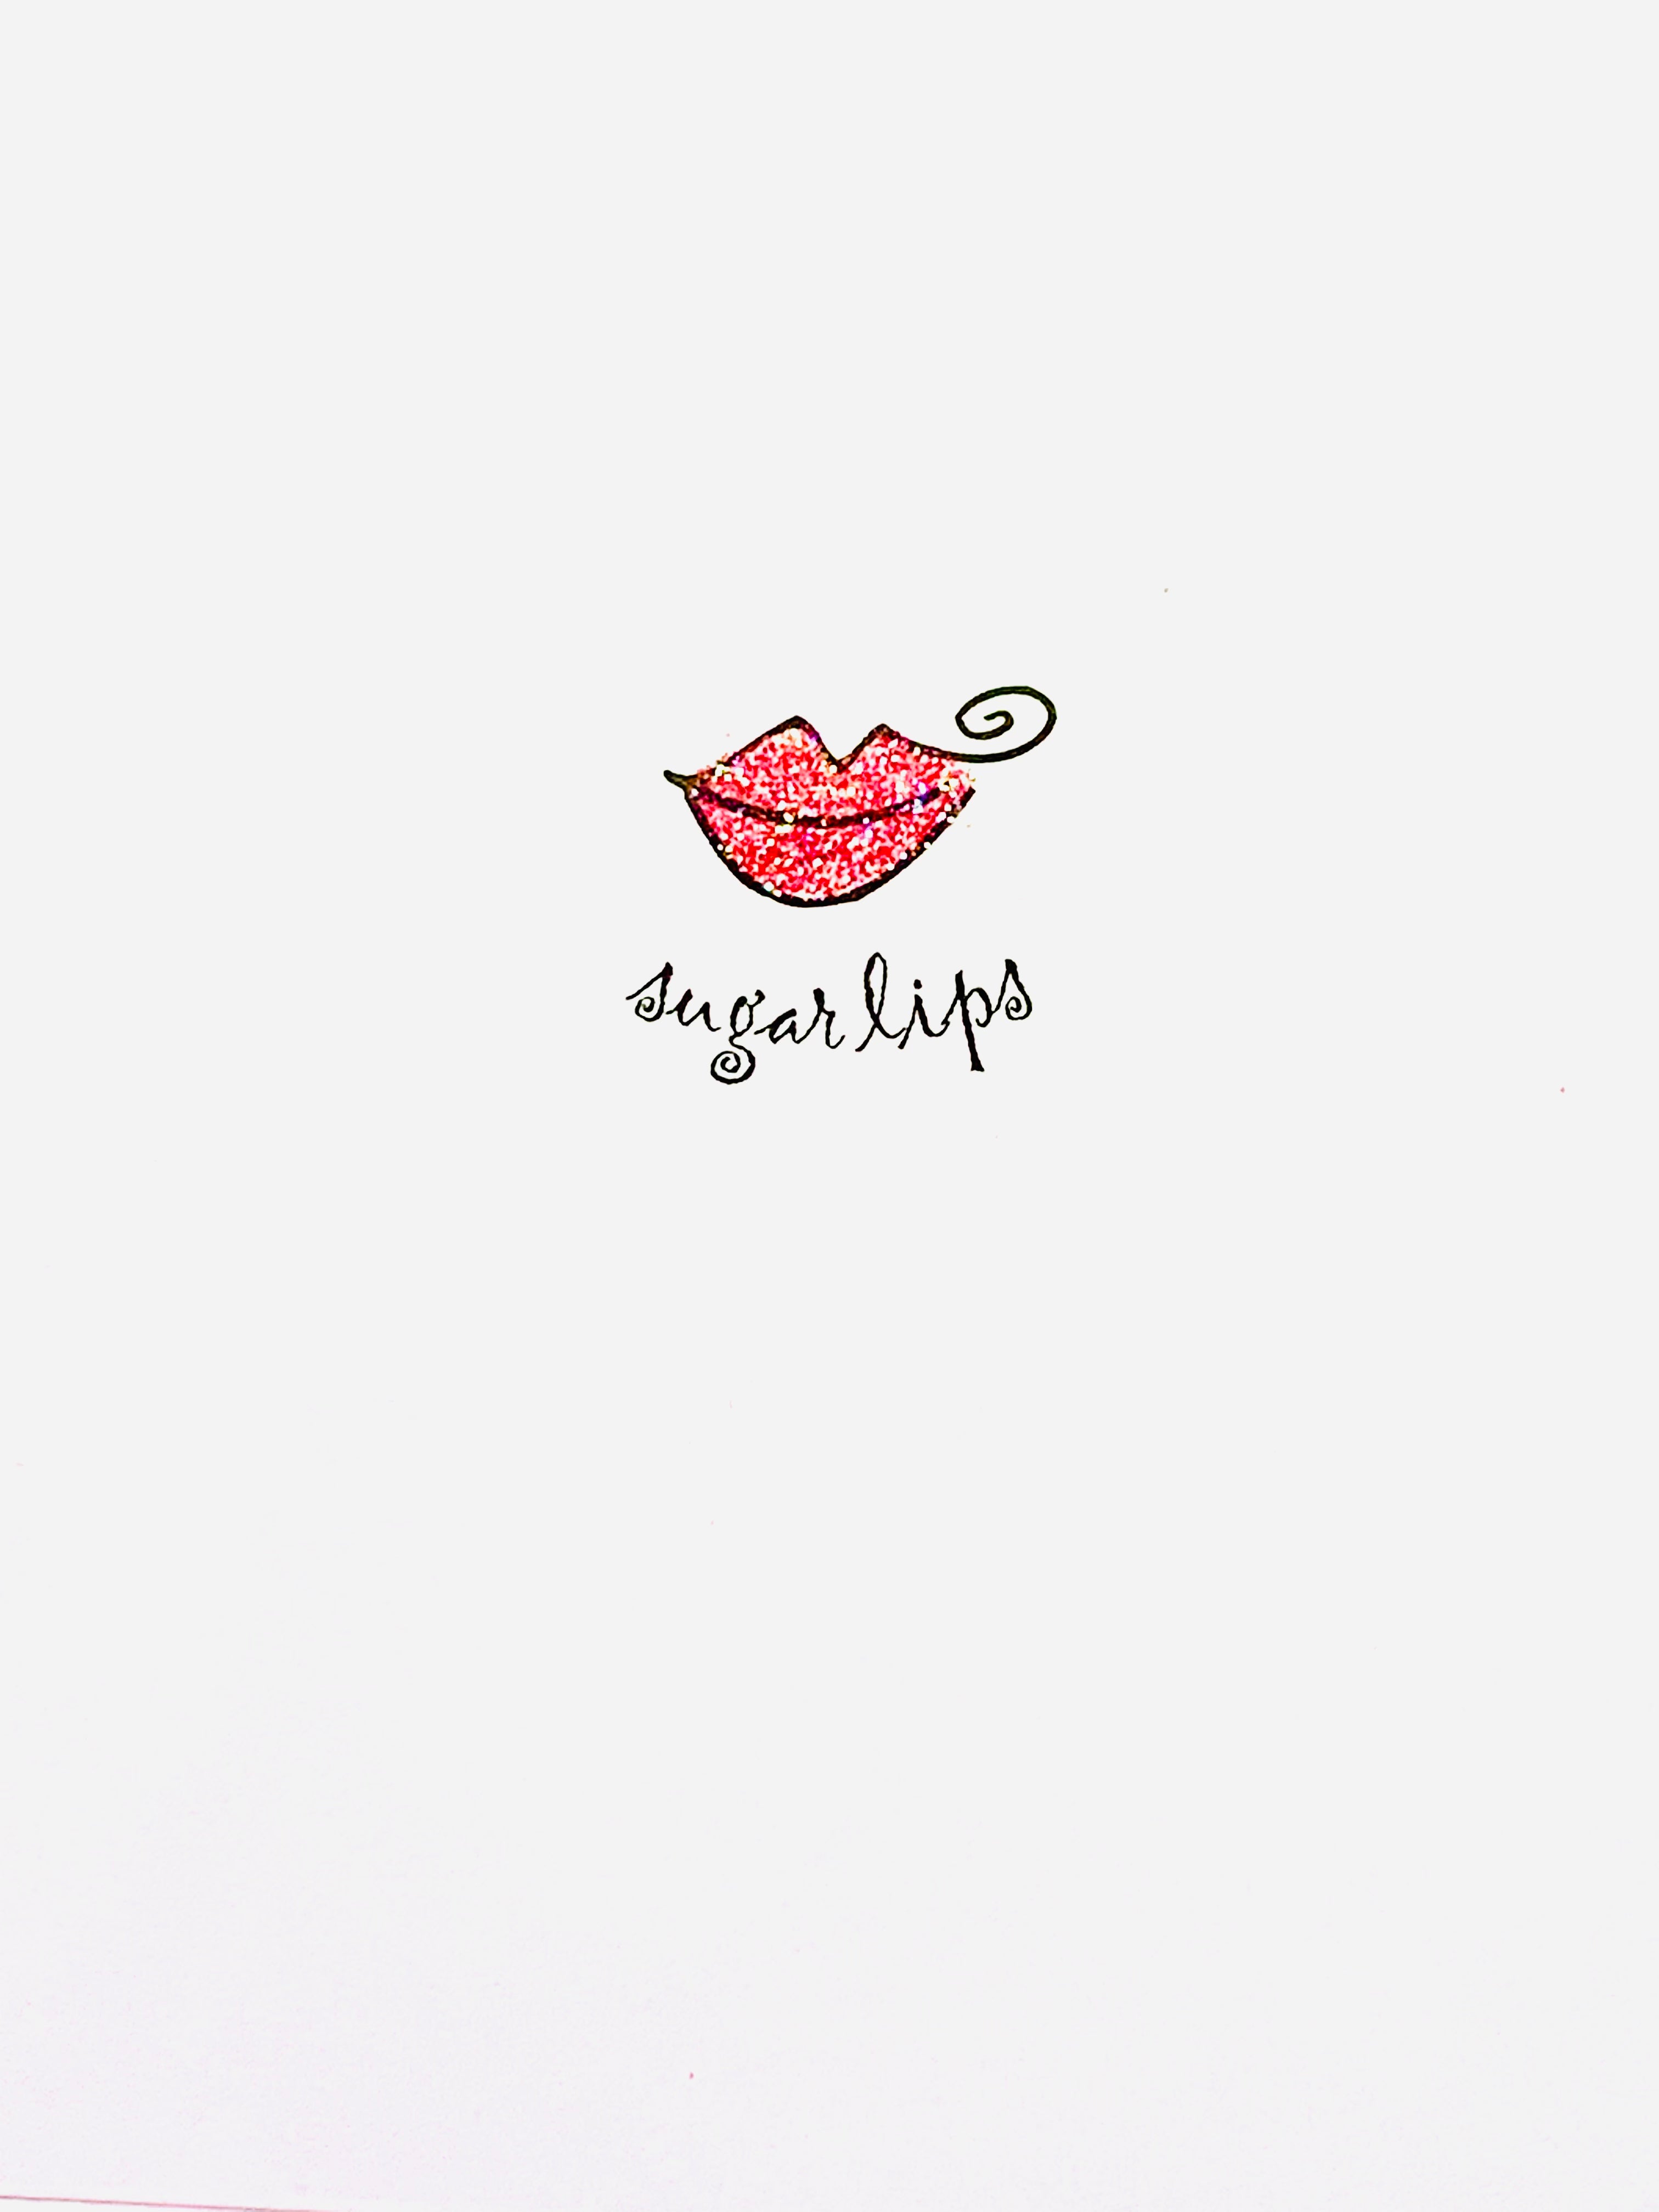 sugar lips wallpaper